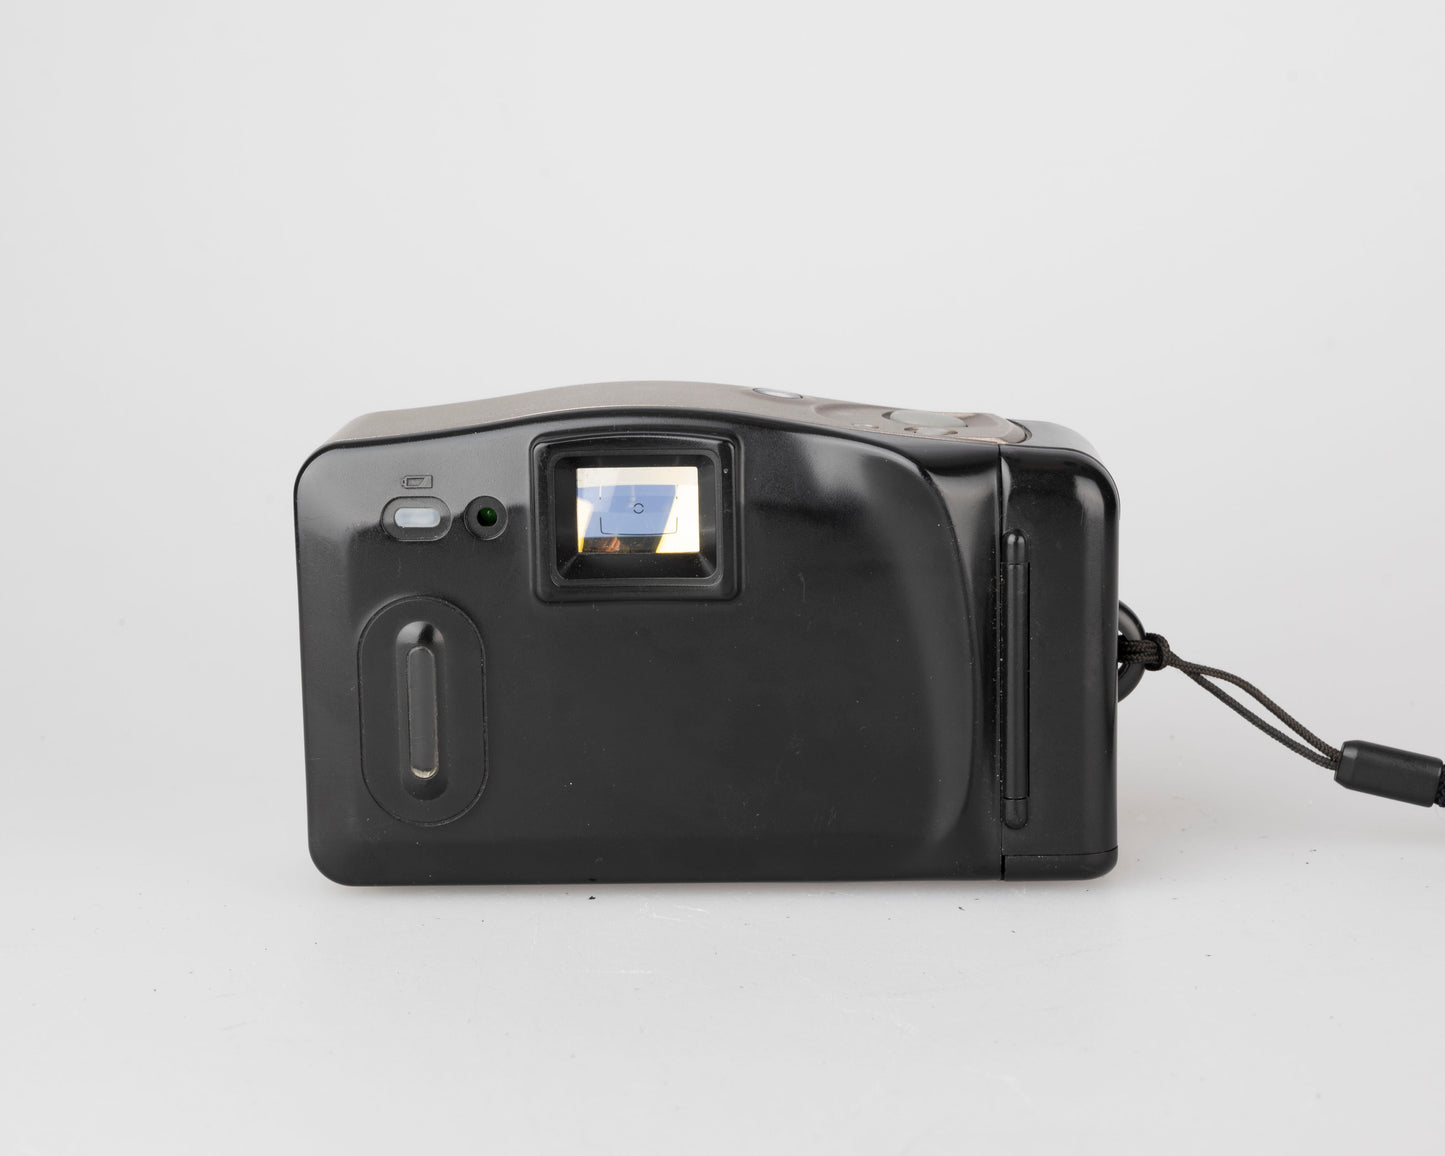 Minolta AF Big Finder 35mm camera w/ case + manual (serial 71001304)